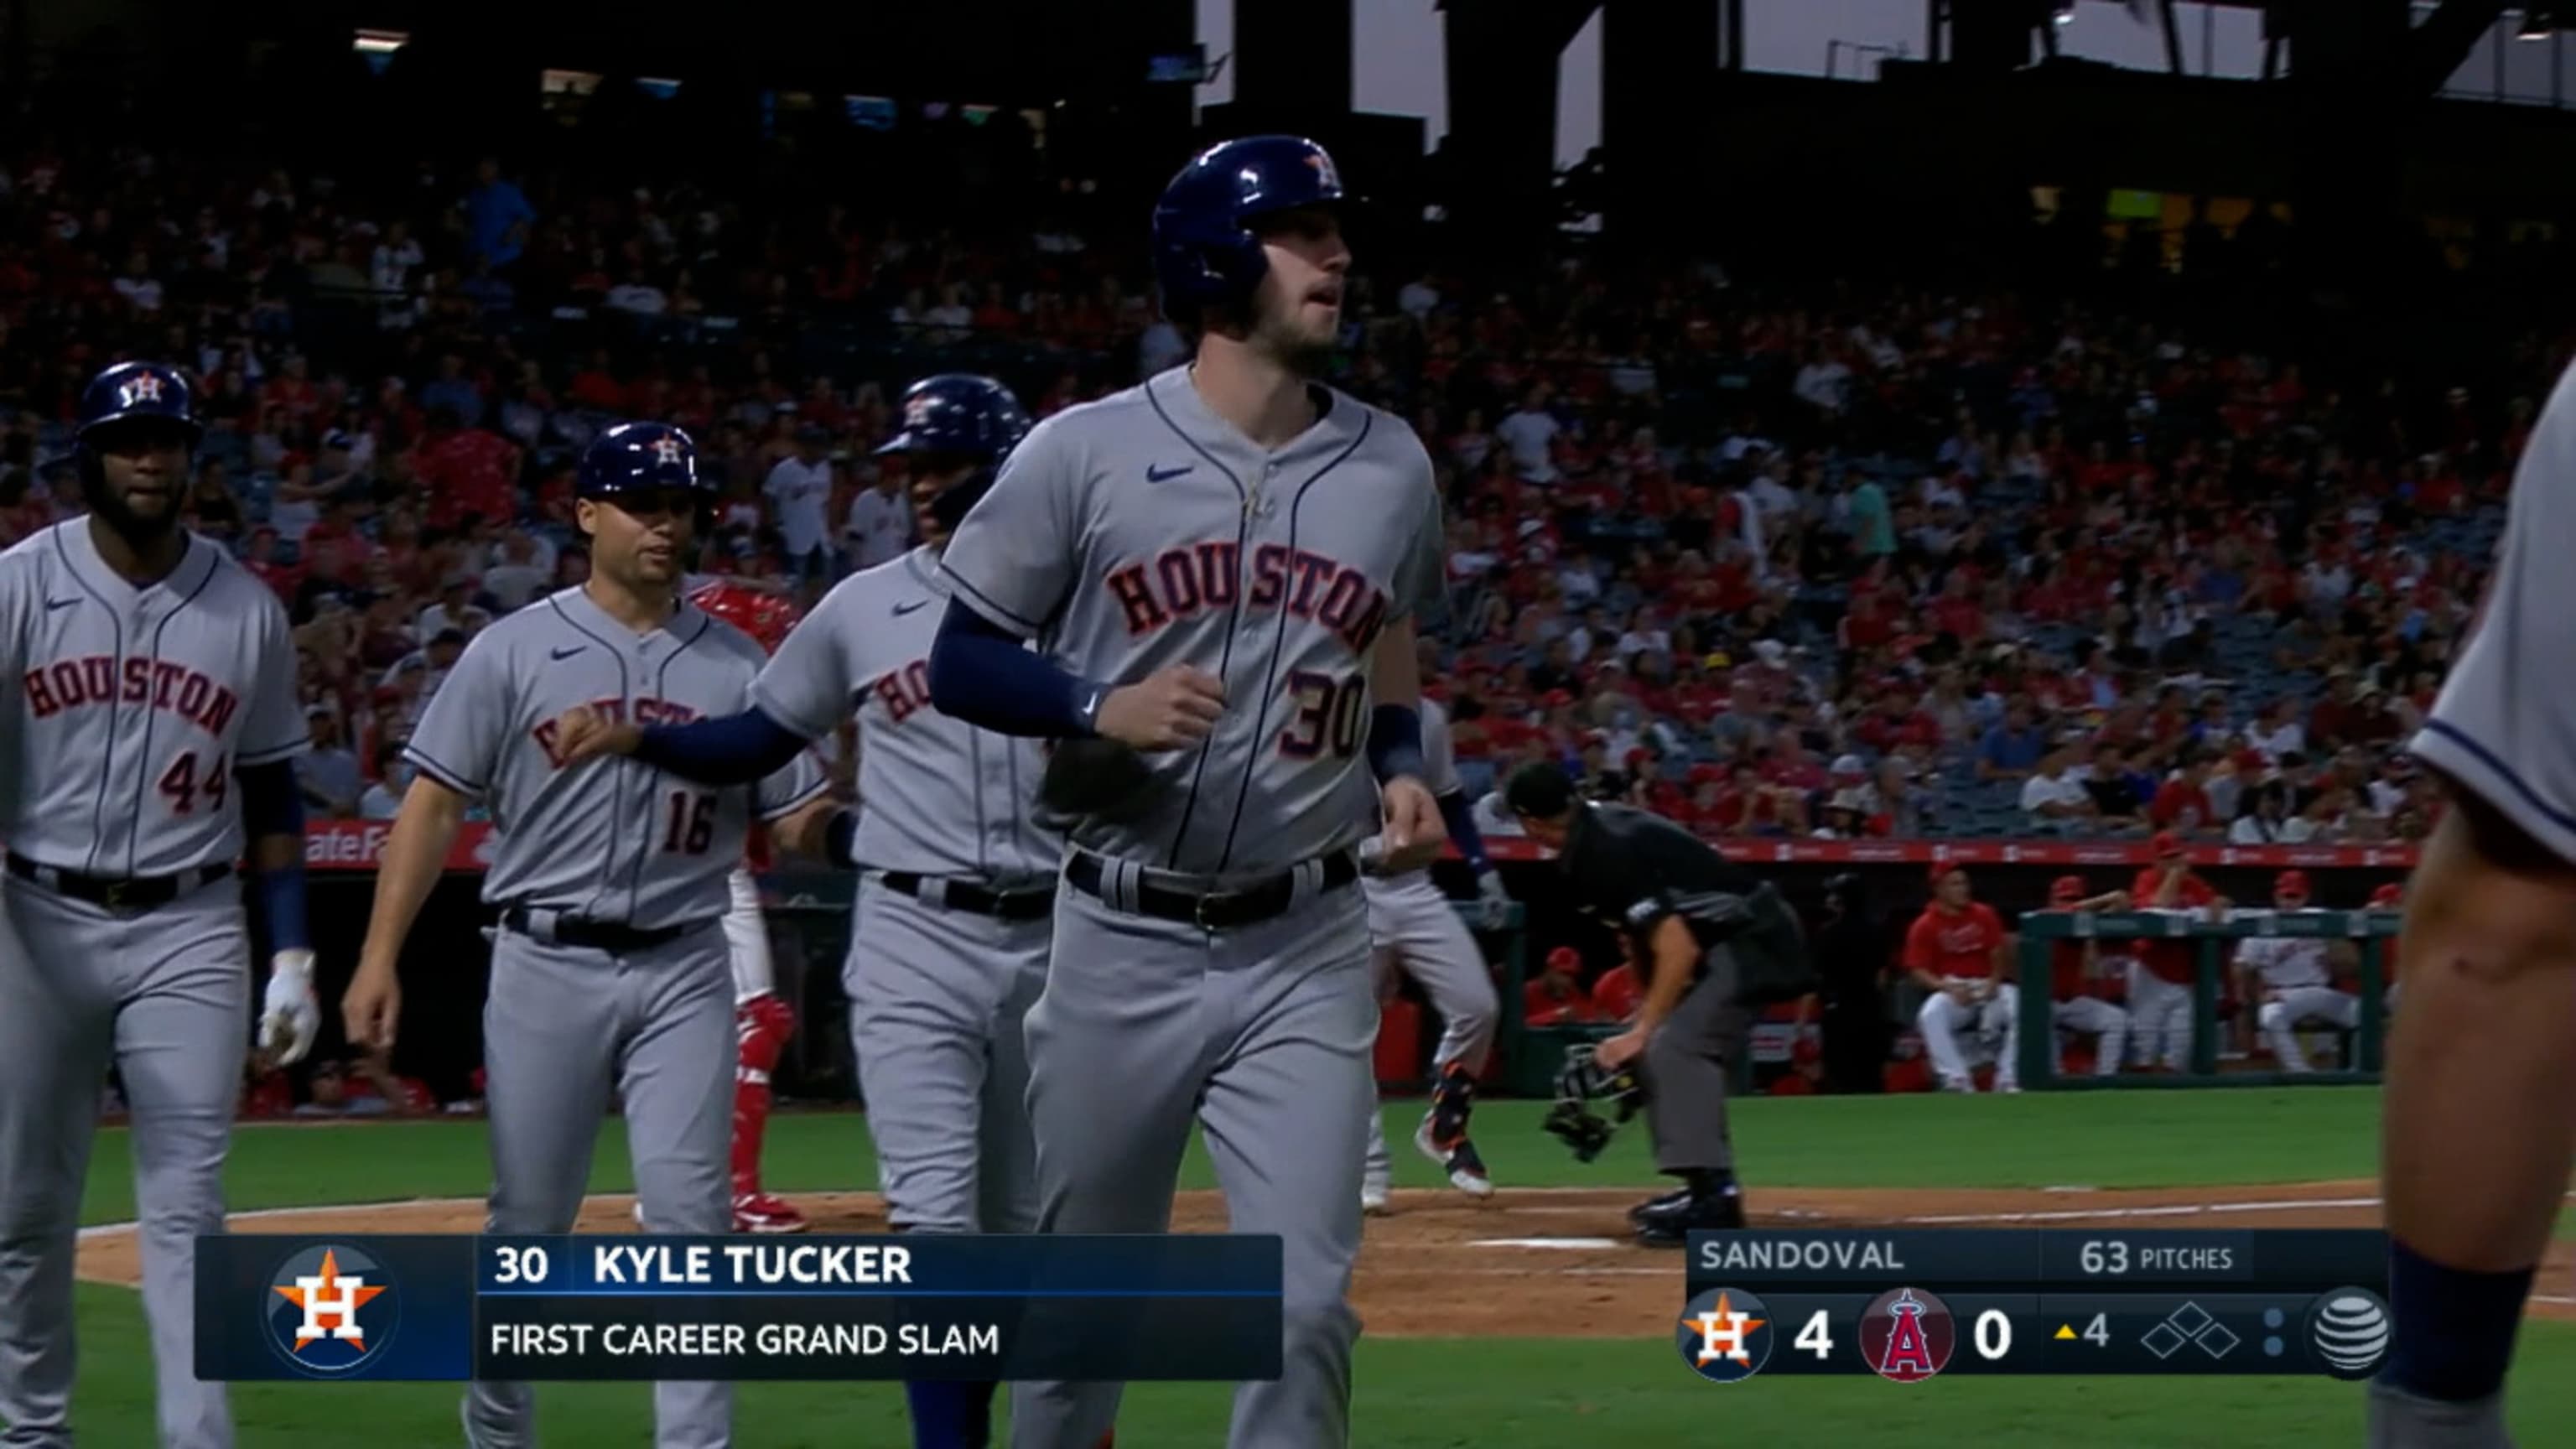 The Houston Astros may promote Yordan Alvarez before Kyle Tucker